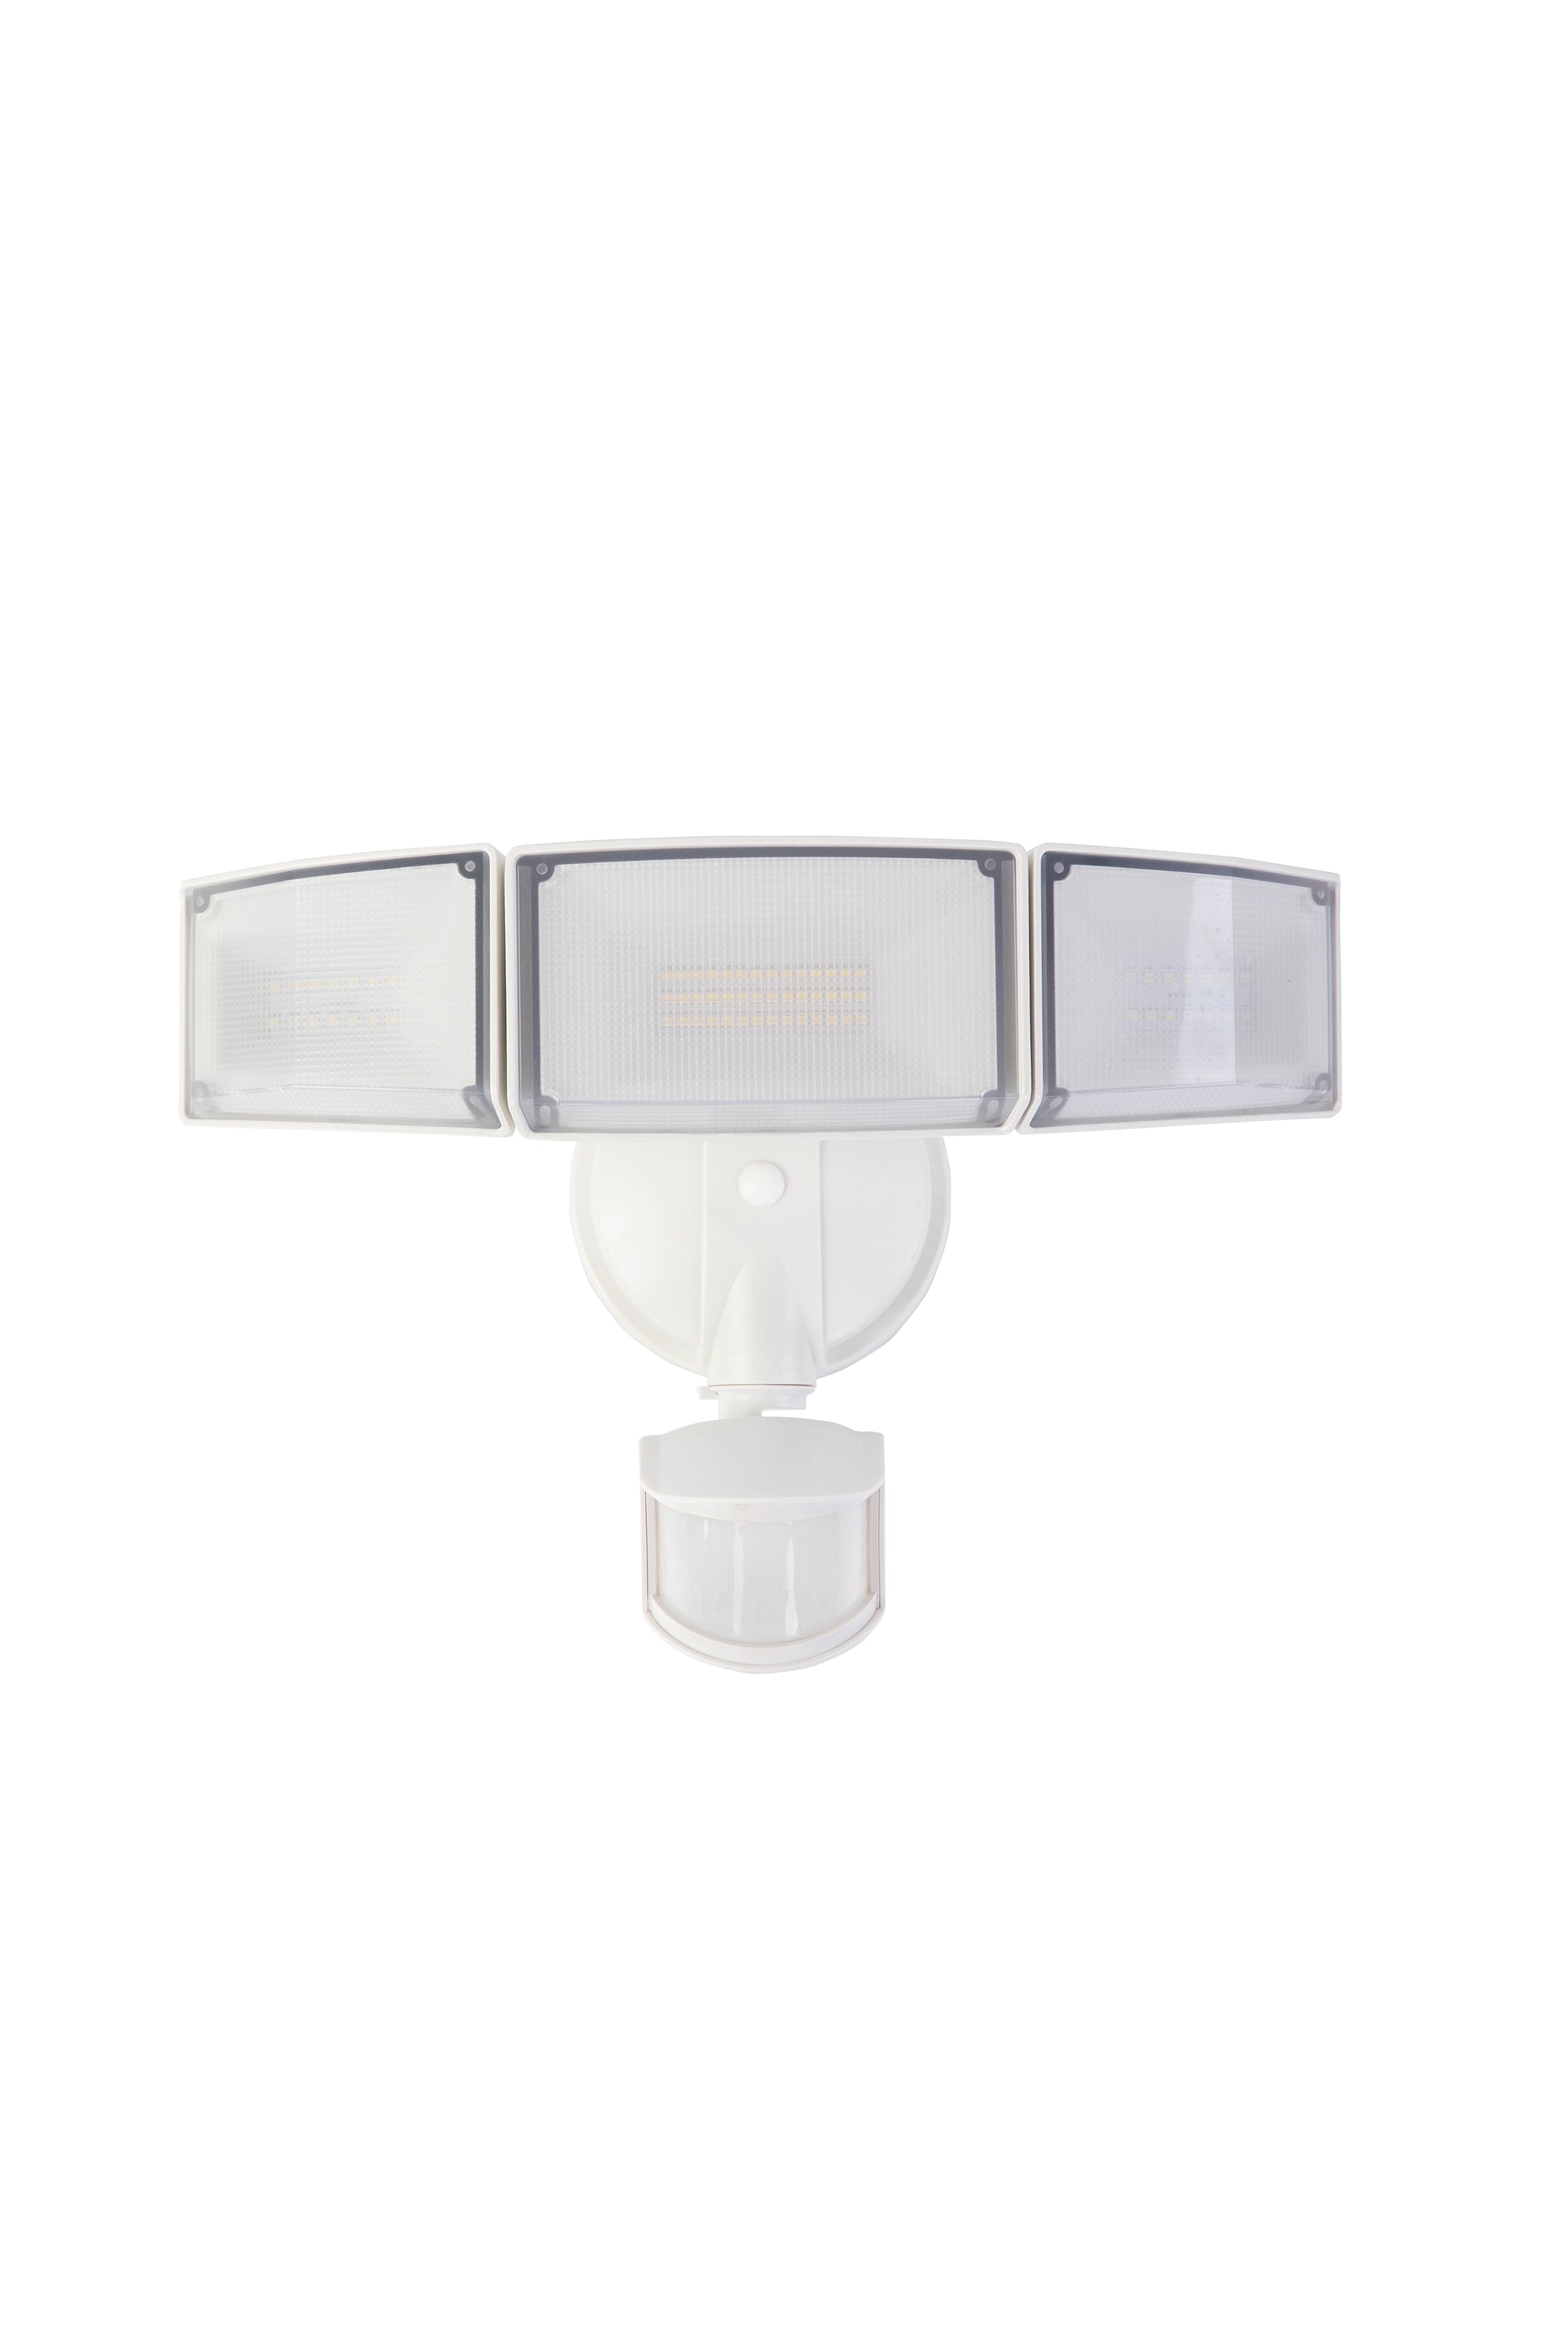 LUTEC-LUTEC-LED Security Lights with Motion Sensor, 6300LM, 5000K, 72W